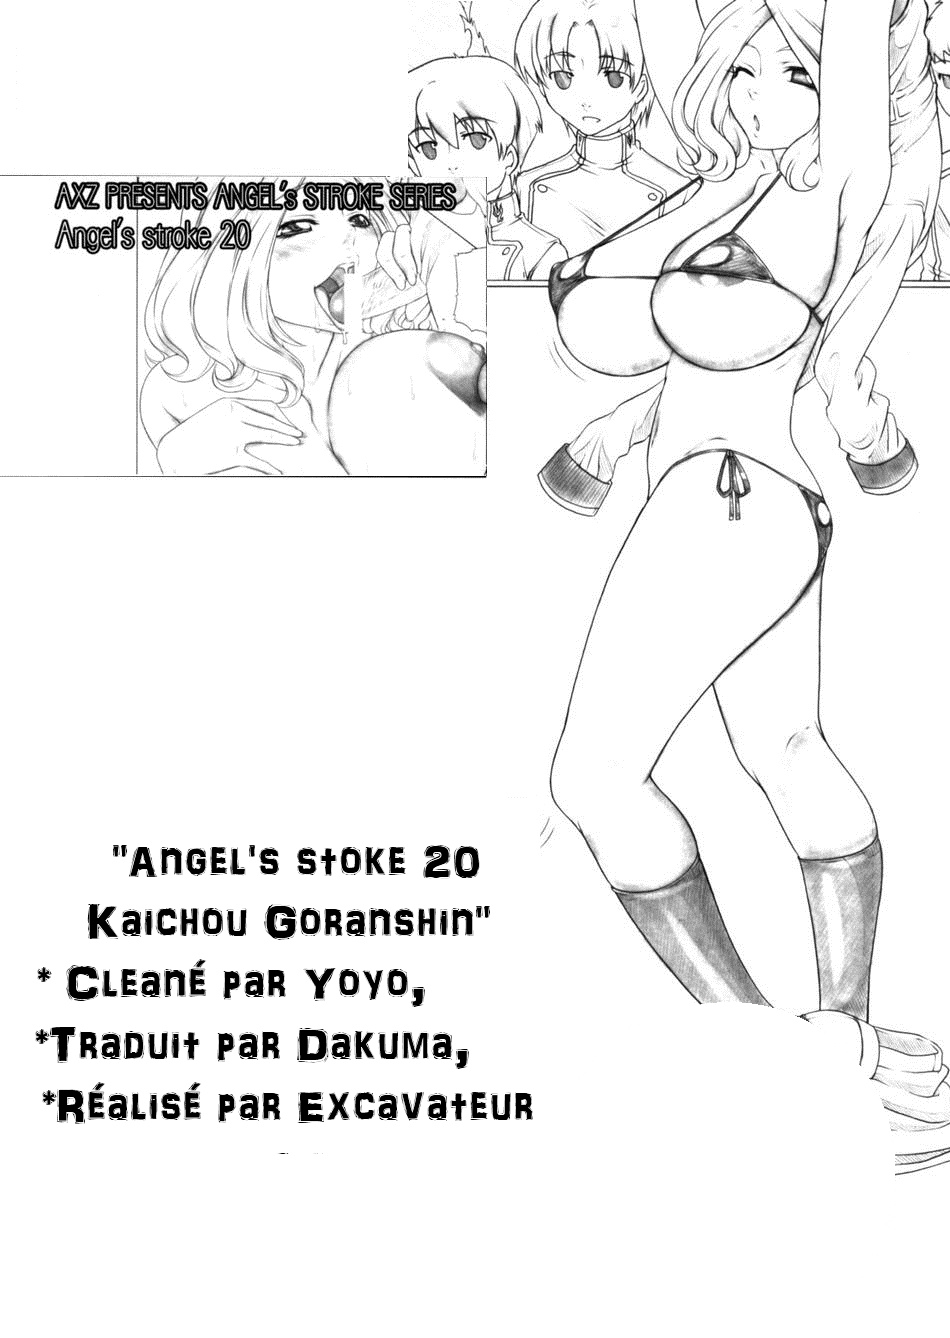 Angels Stroke 20 Kaichou Goranshin! numero d'image 18